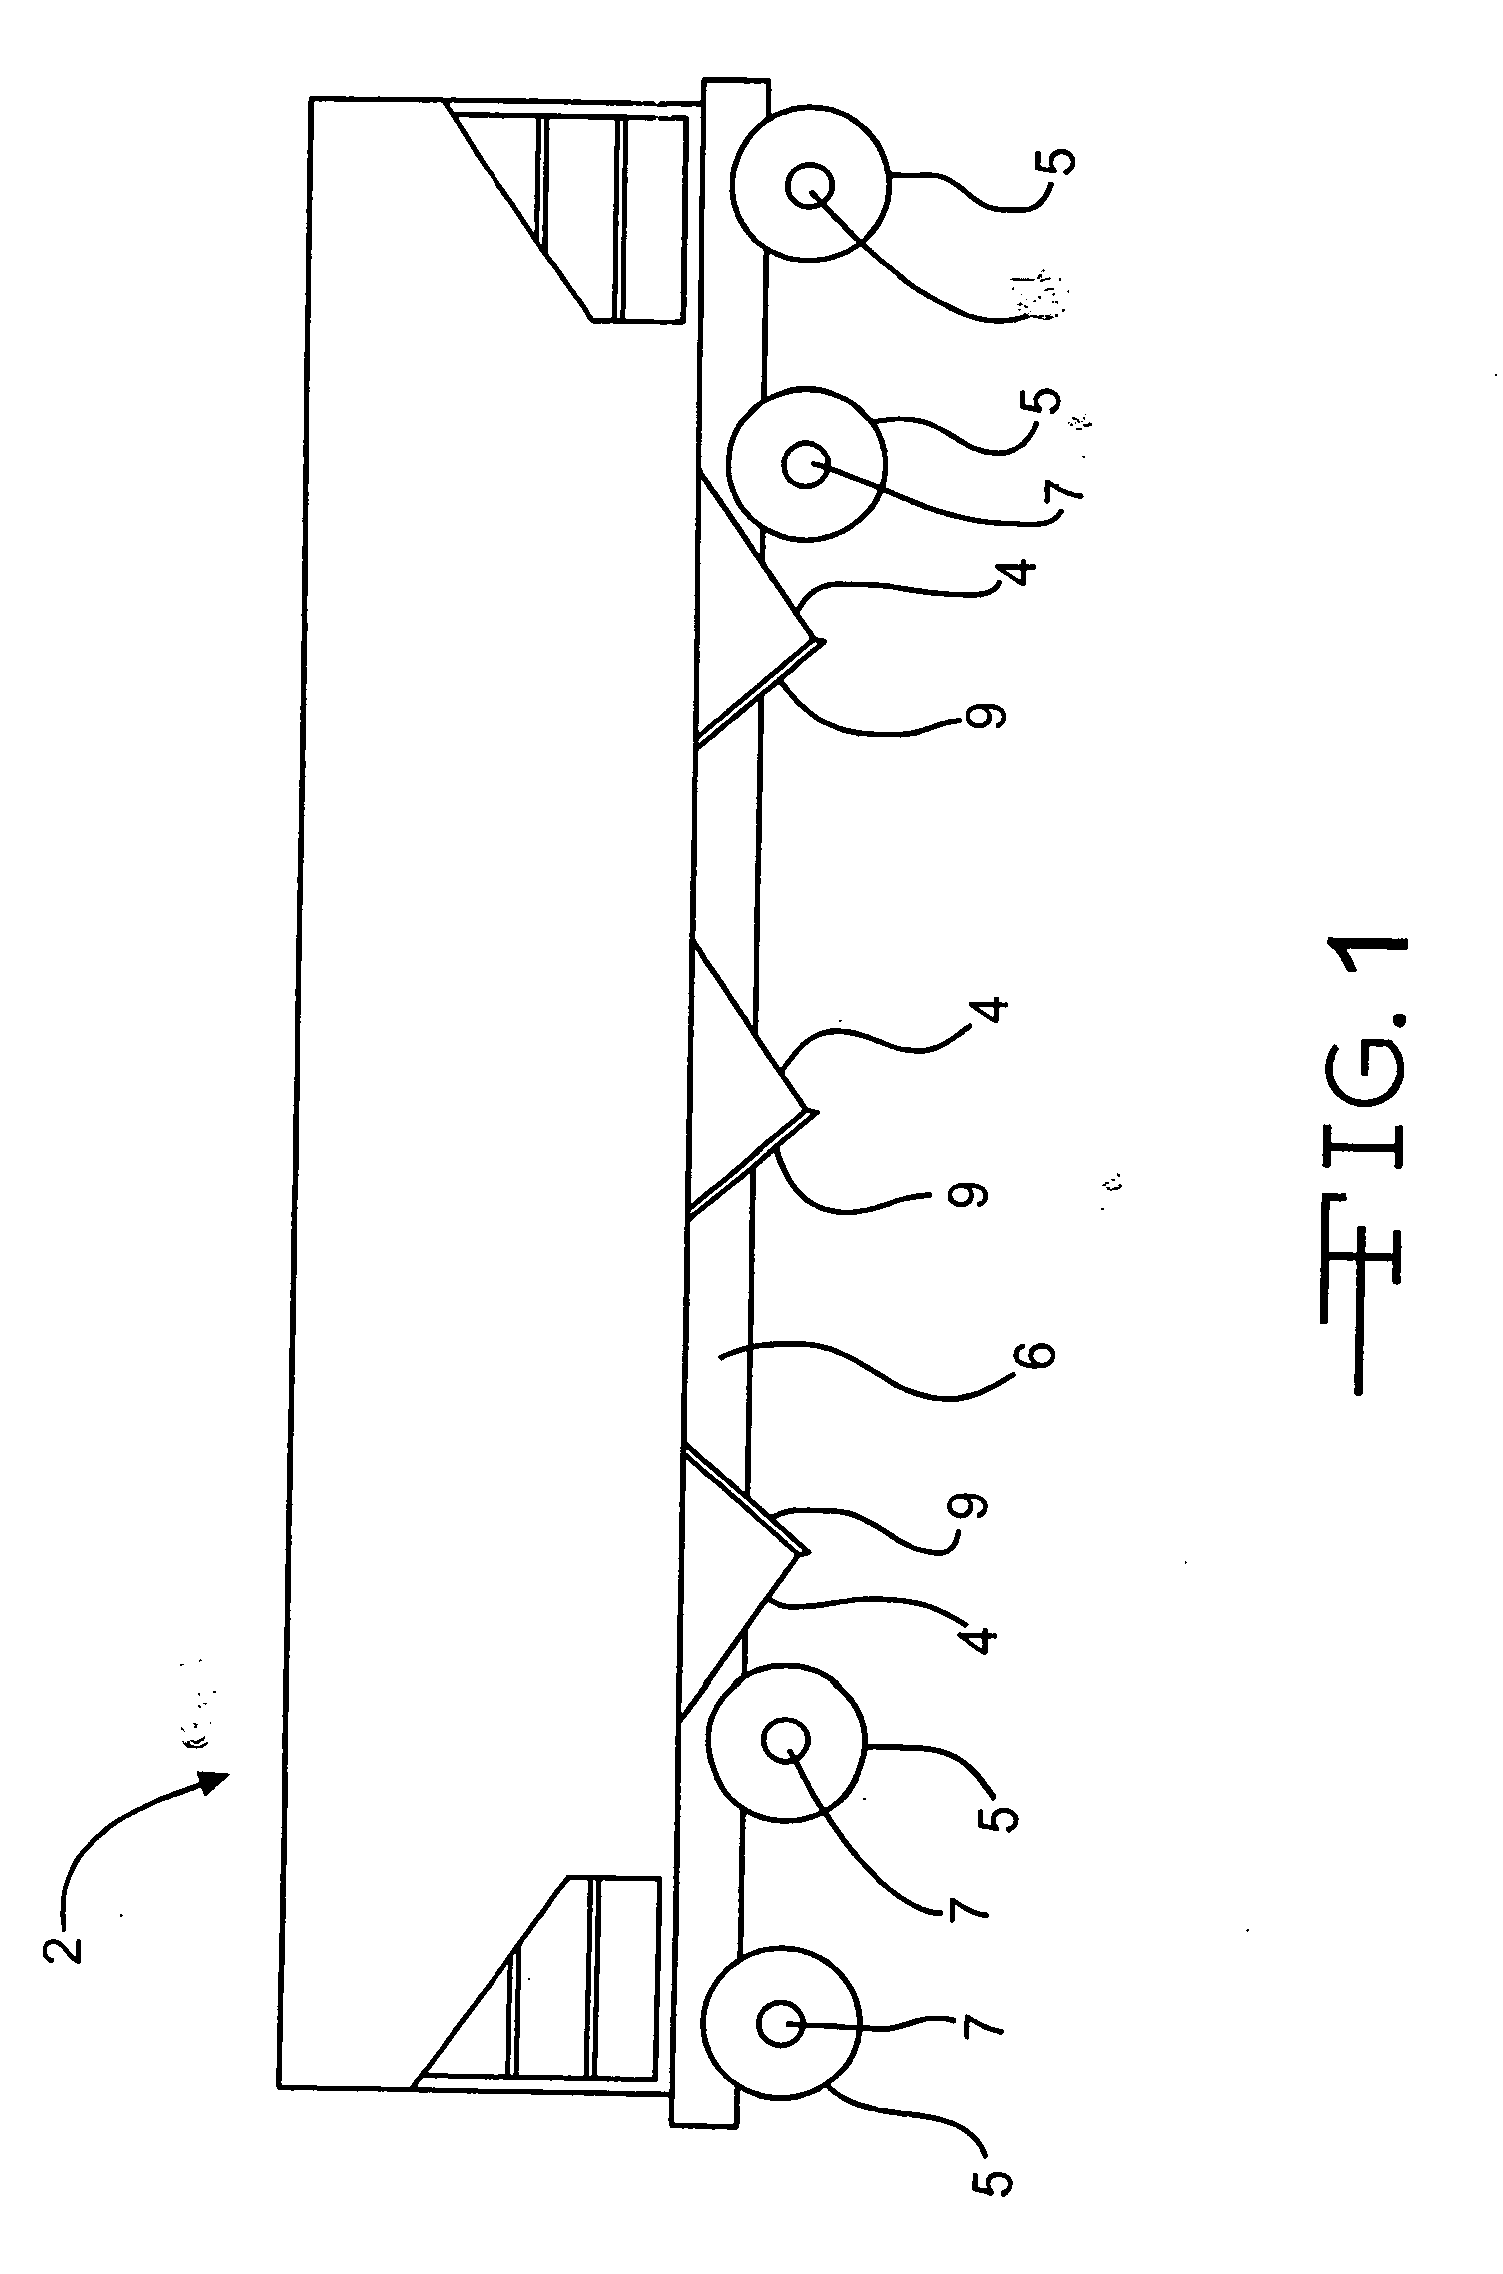 Railroad hopper car door actuating mechanism